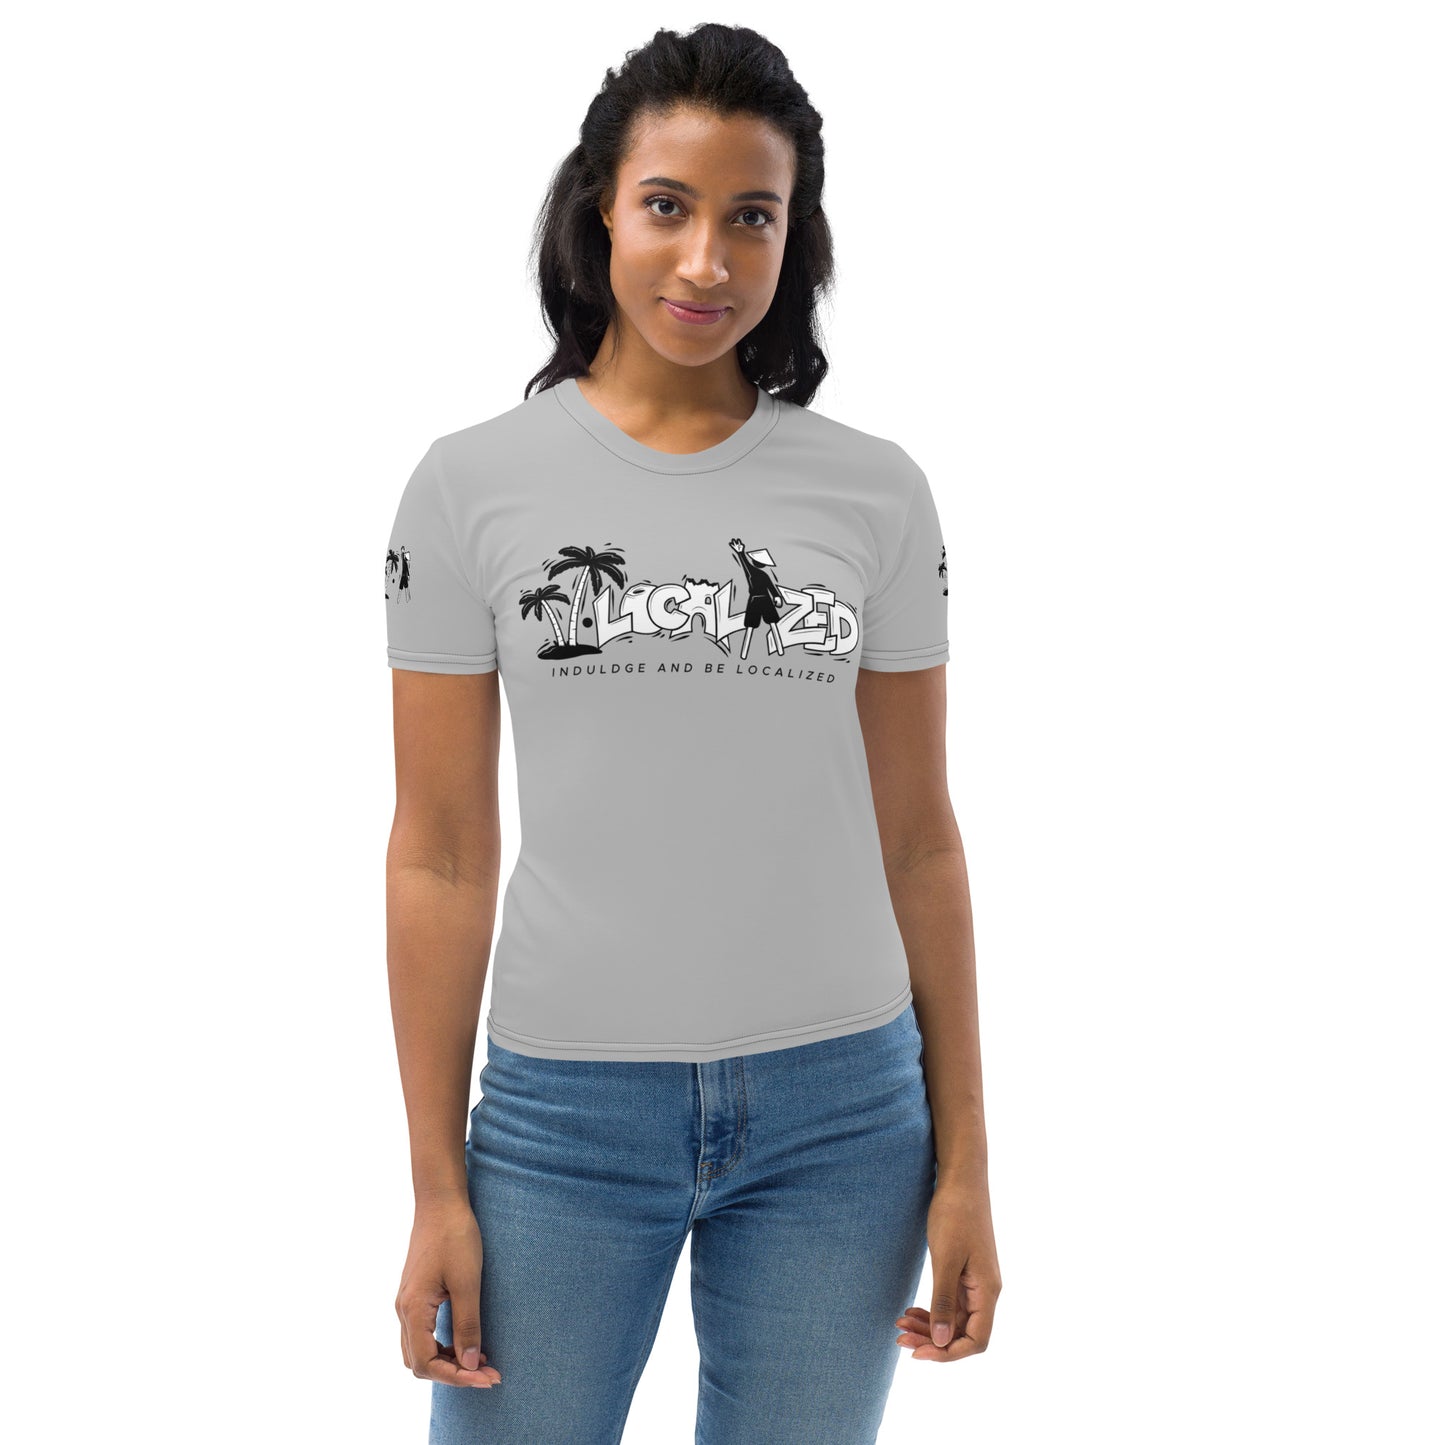 Gray V.Localized (Black/White) Women’s Dry-Fit T-Shirt